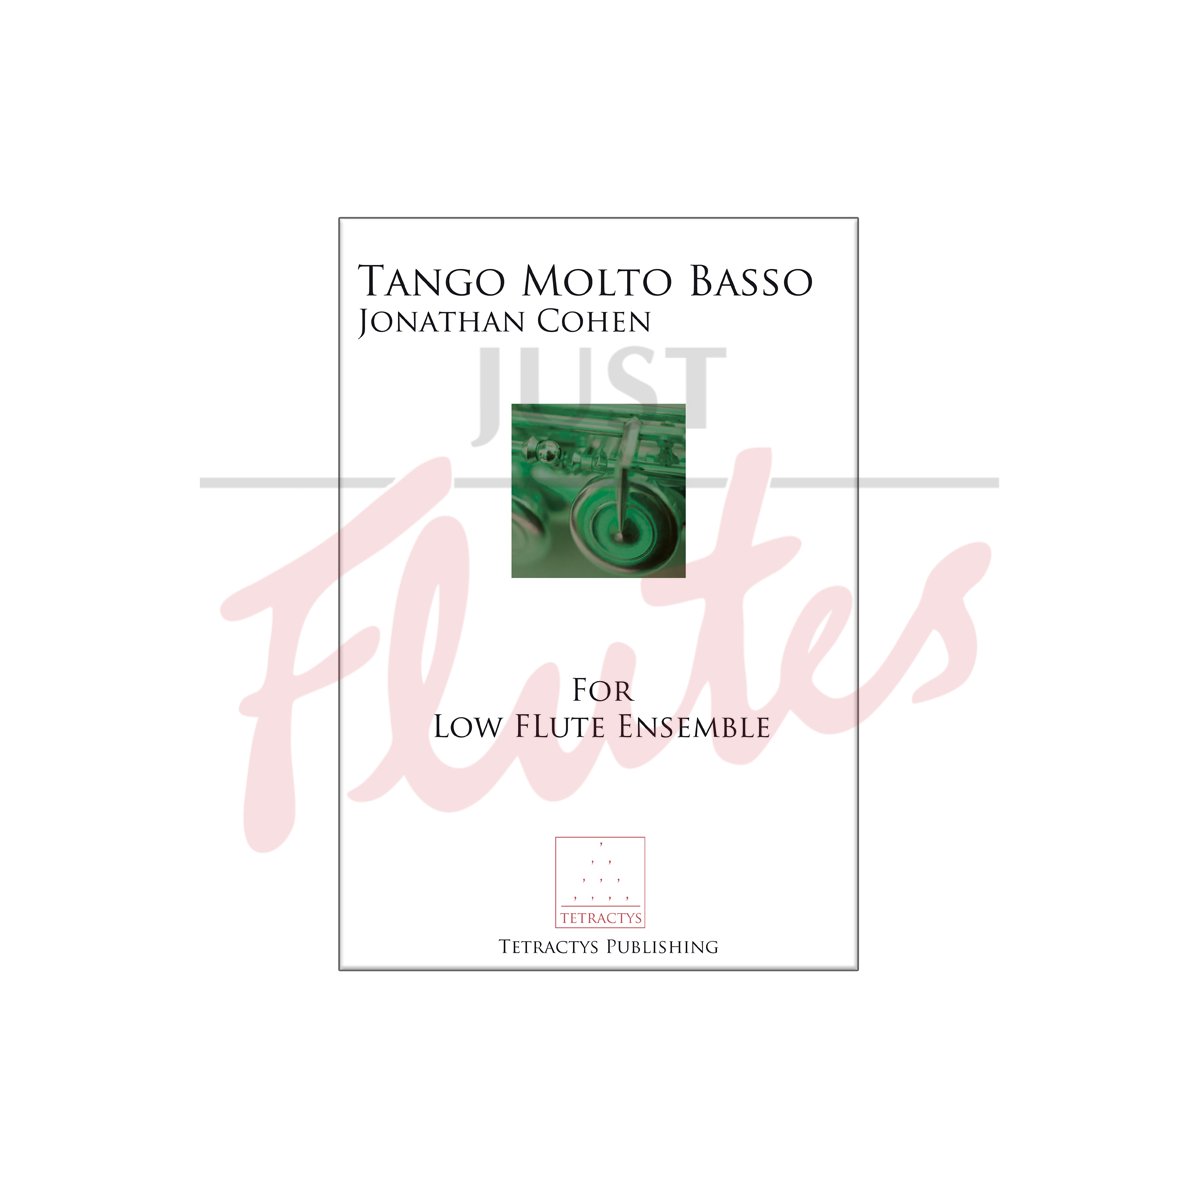 Tango Molto Basso for Low Flute Ensemble